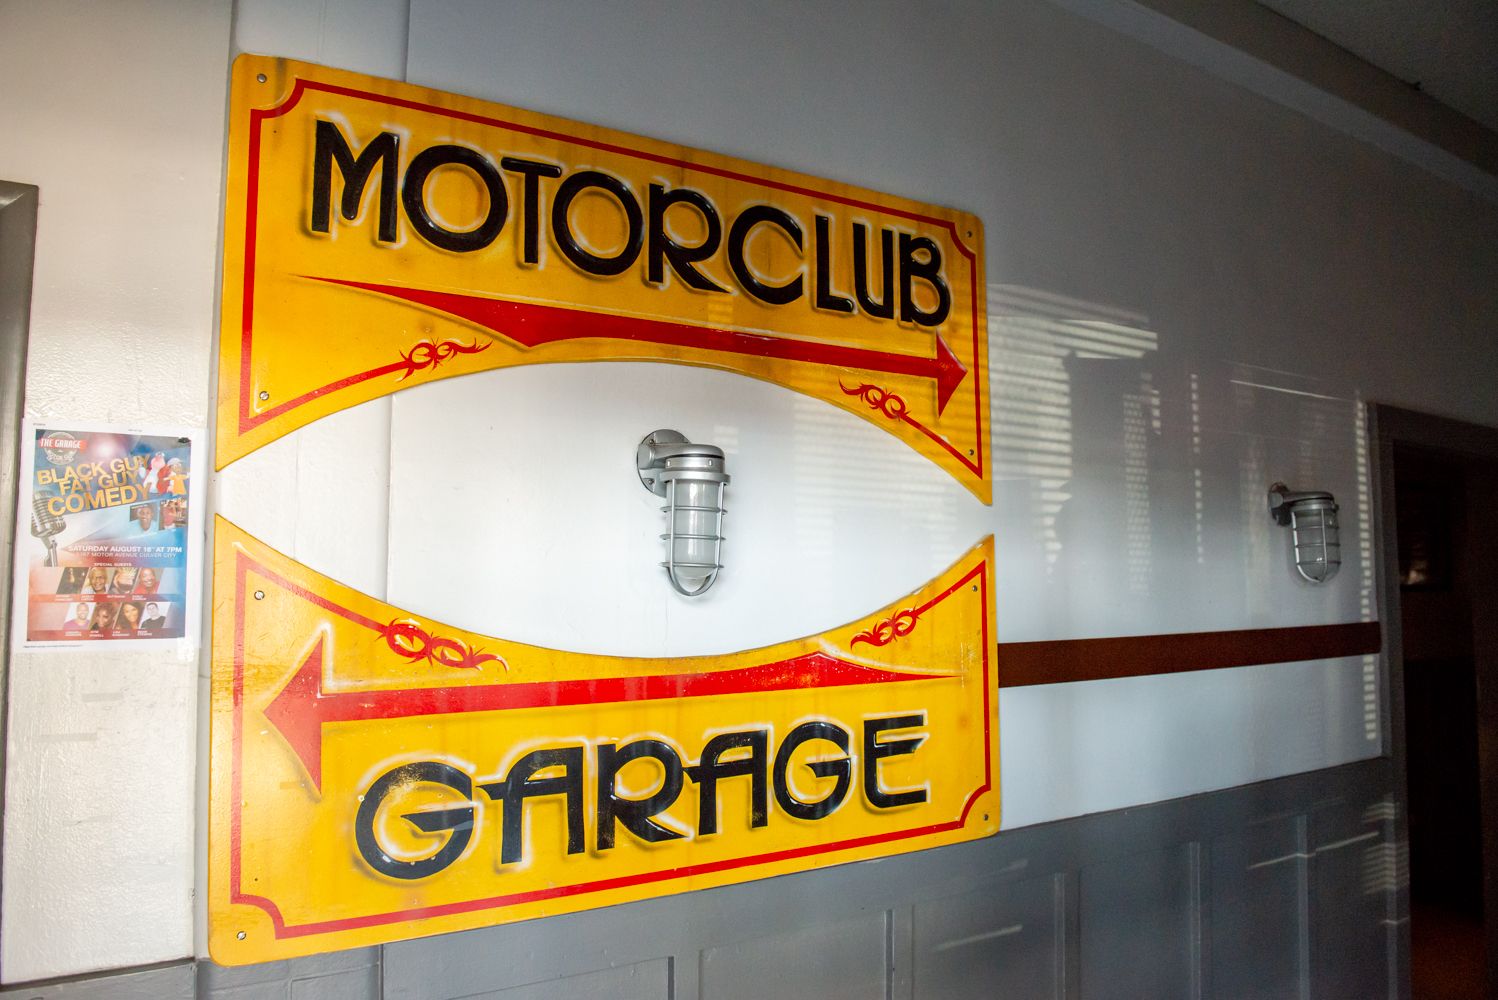 The Garage on Motor